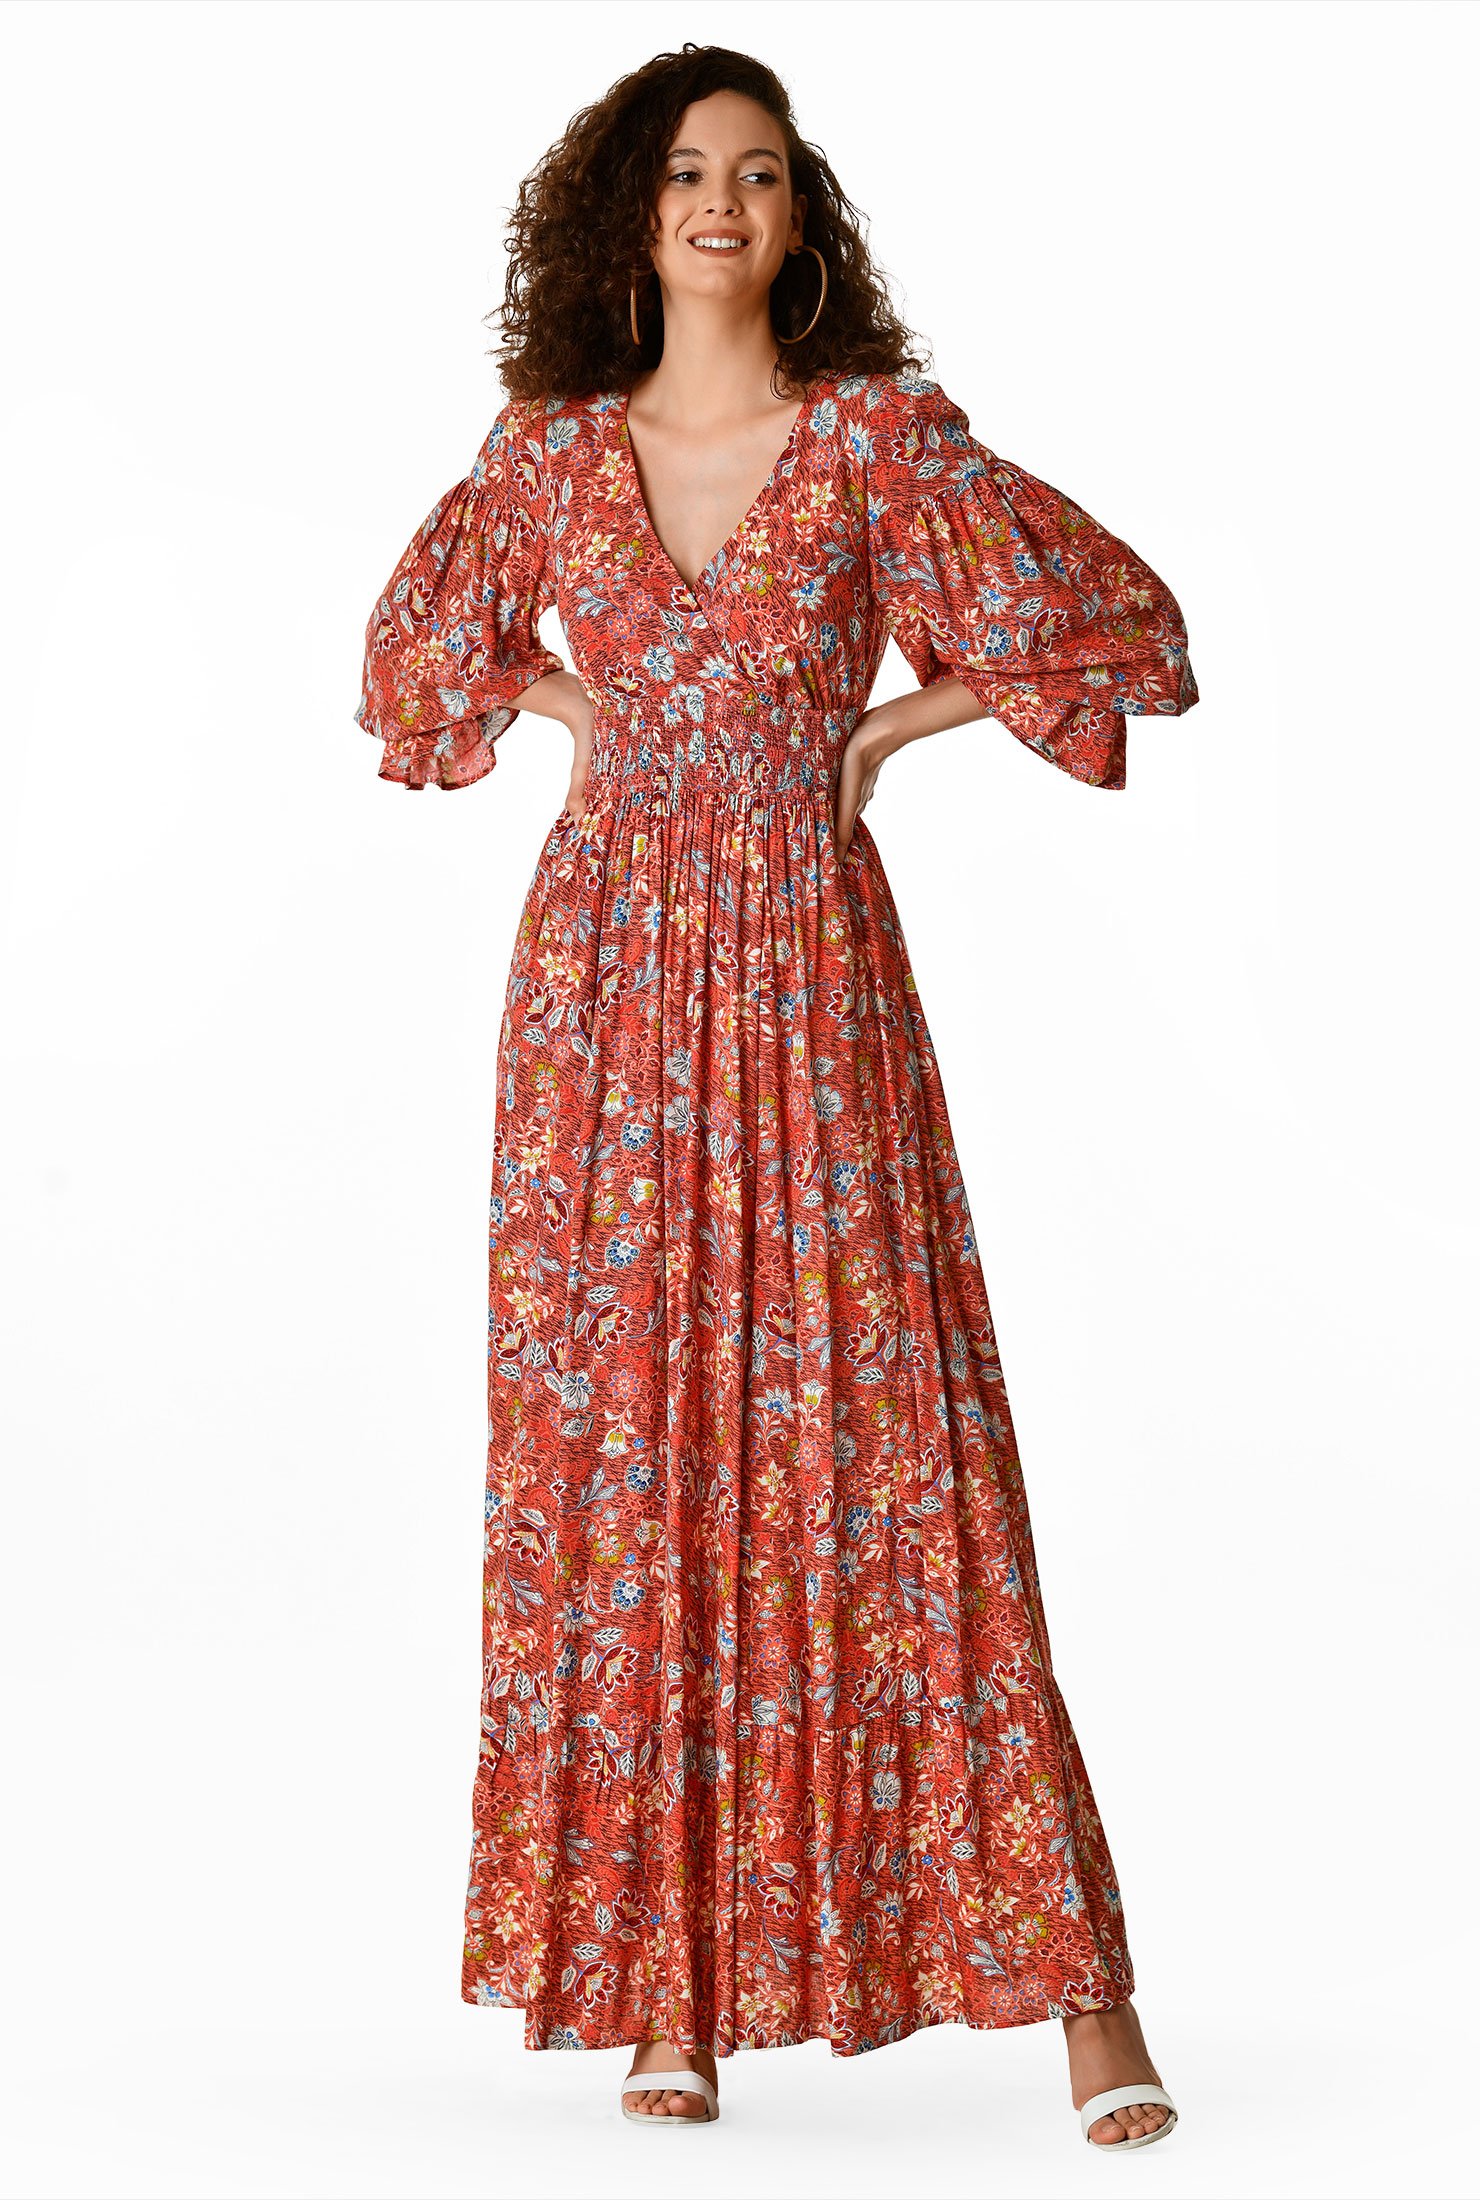 Miamasvin] Floral Print Elastic Waist Dress